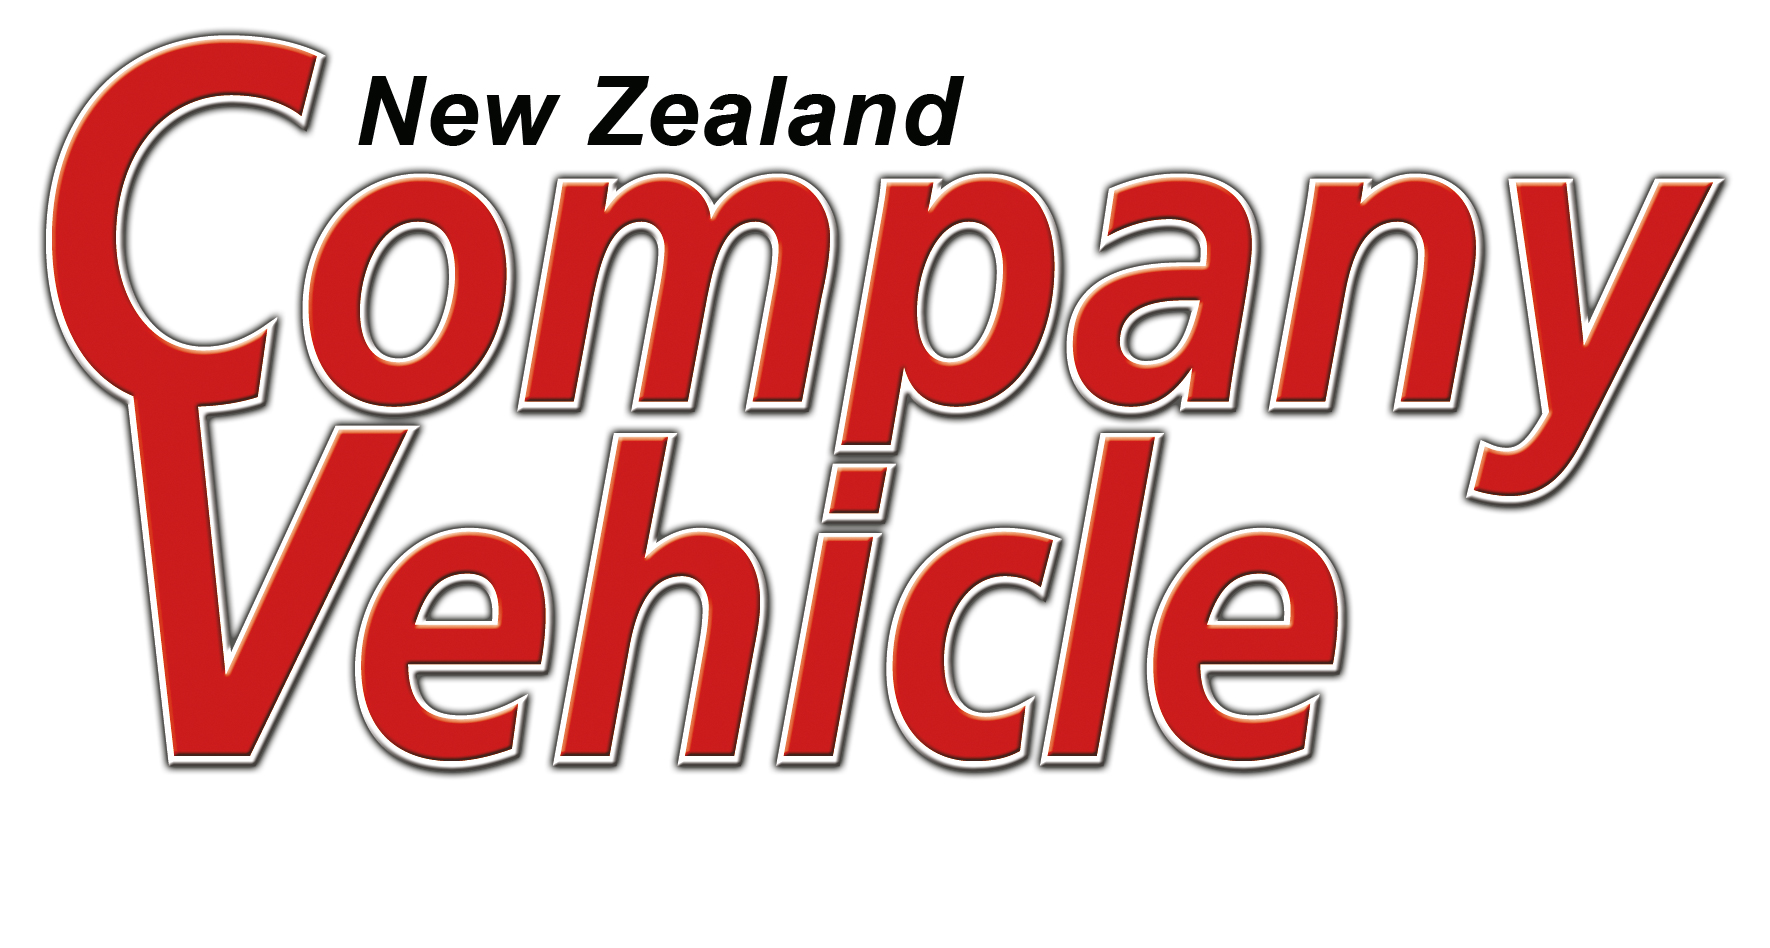 NZ Company Vehicle masthead